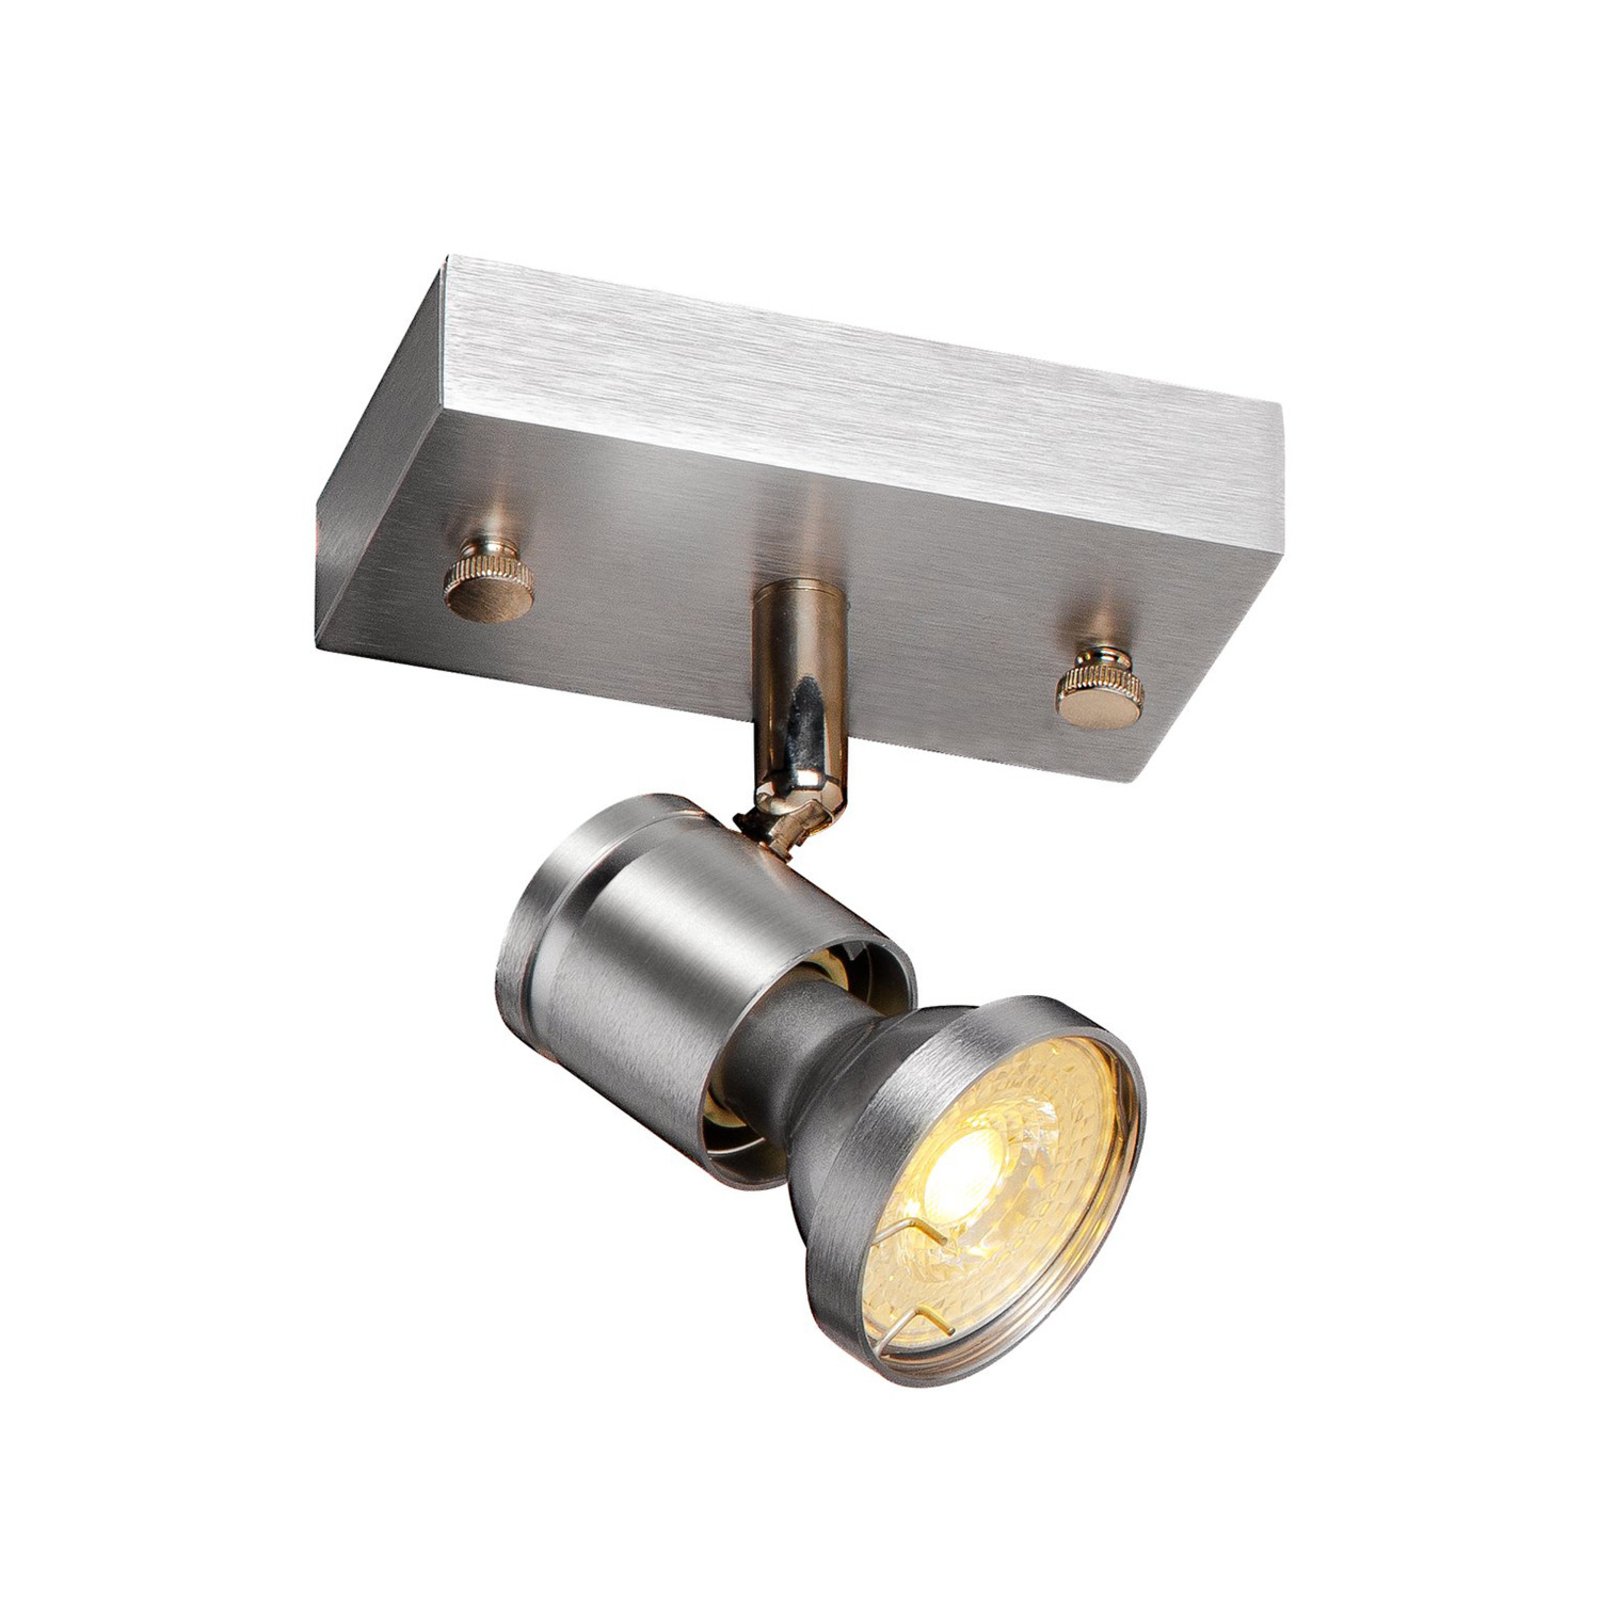 SLV Asto 1-bulb downlight with decorative ring